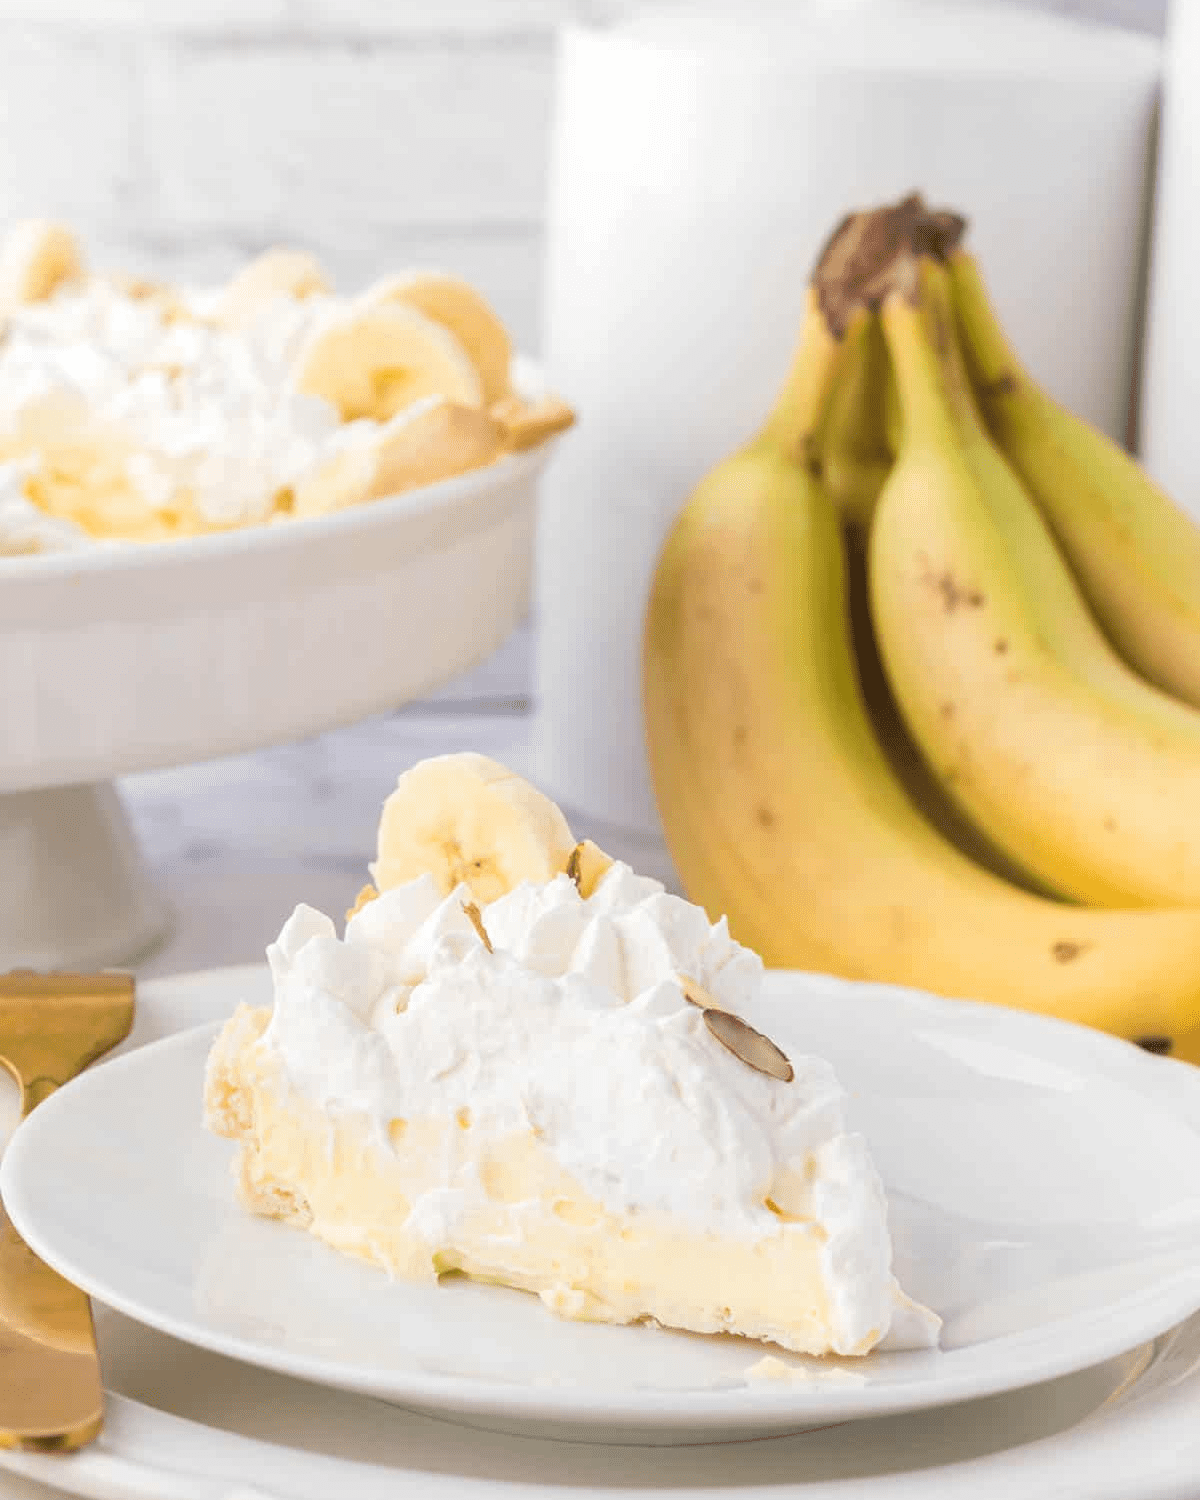 Banana cream pie slice with banana bunch
